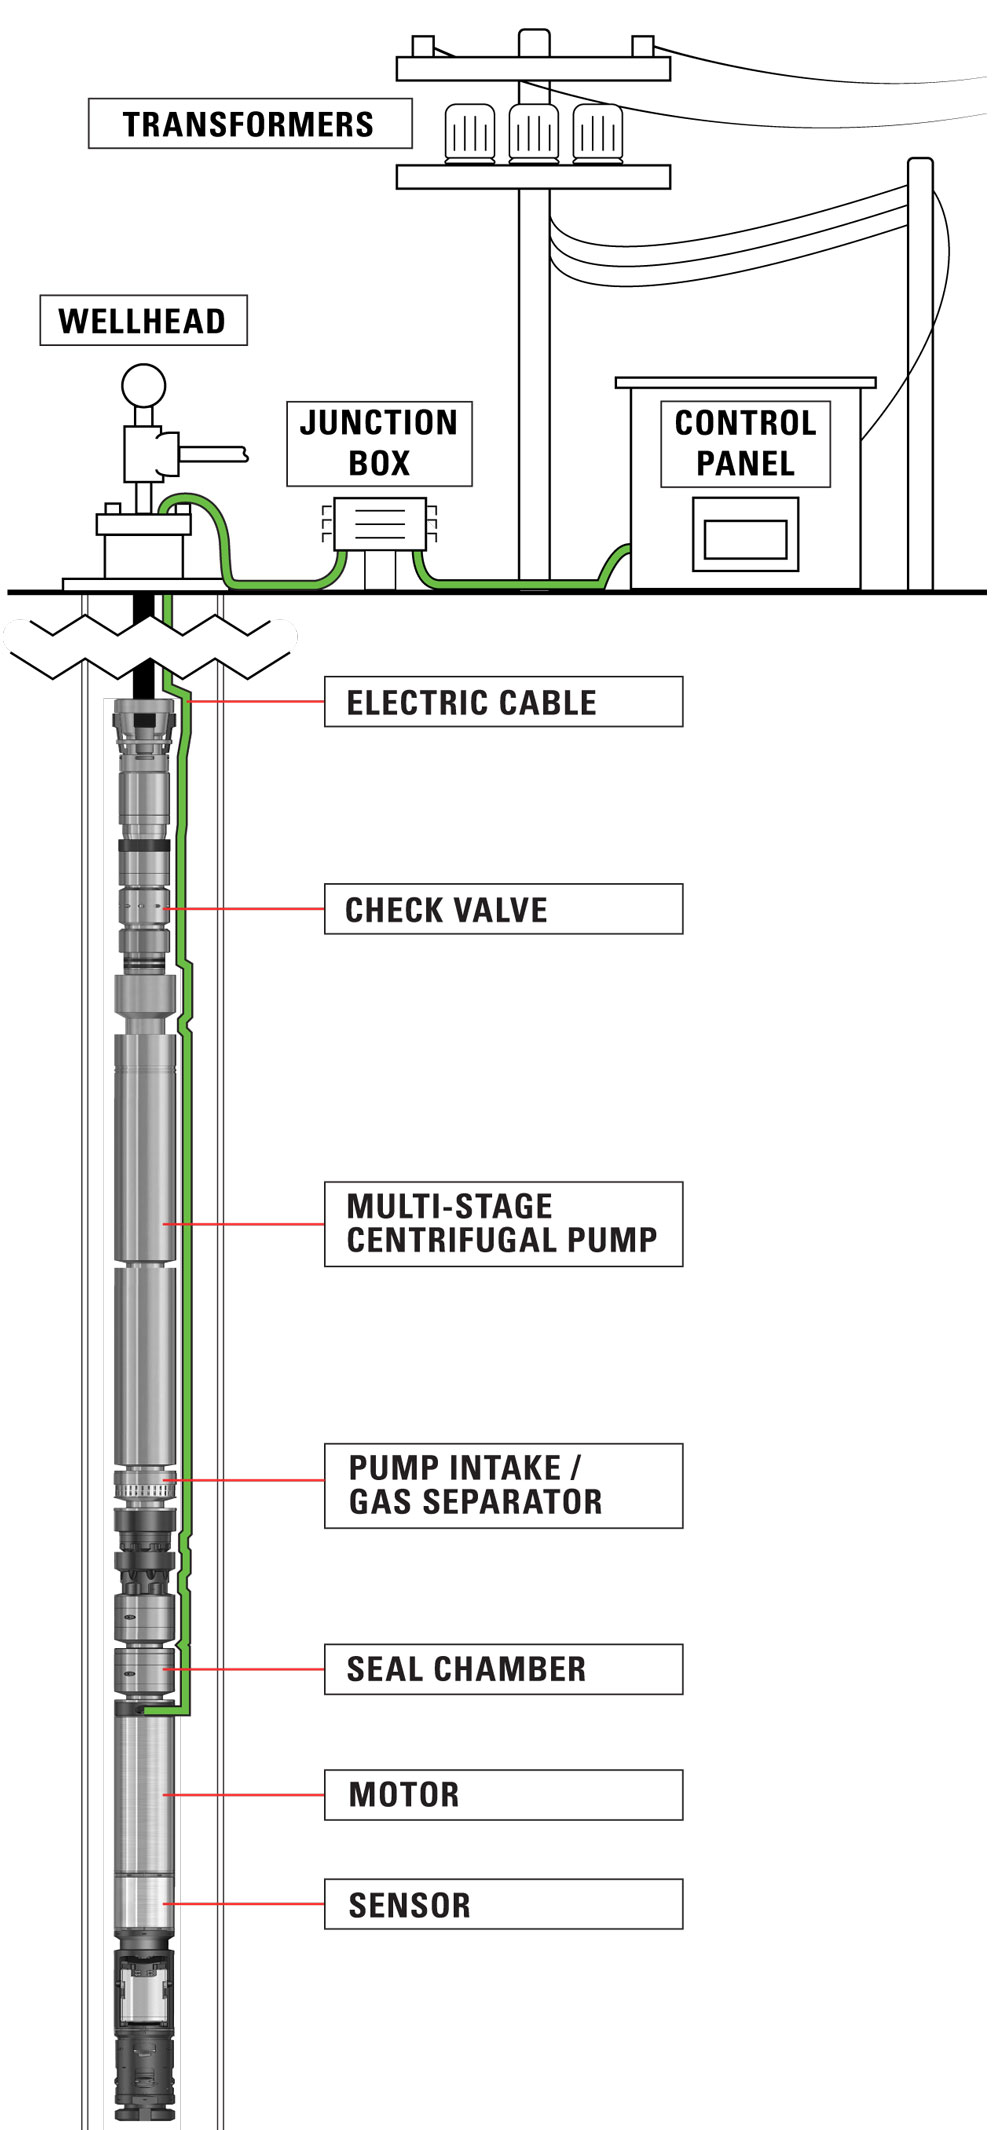 ESP artificial lift system simplified illustration